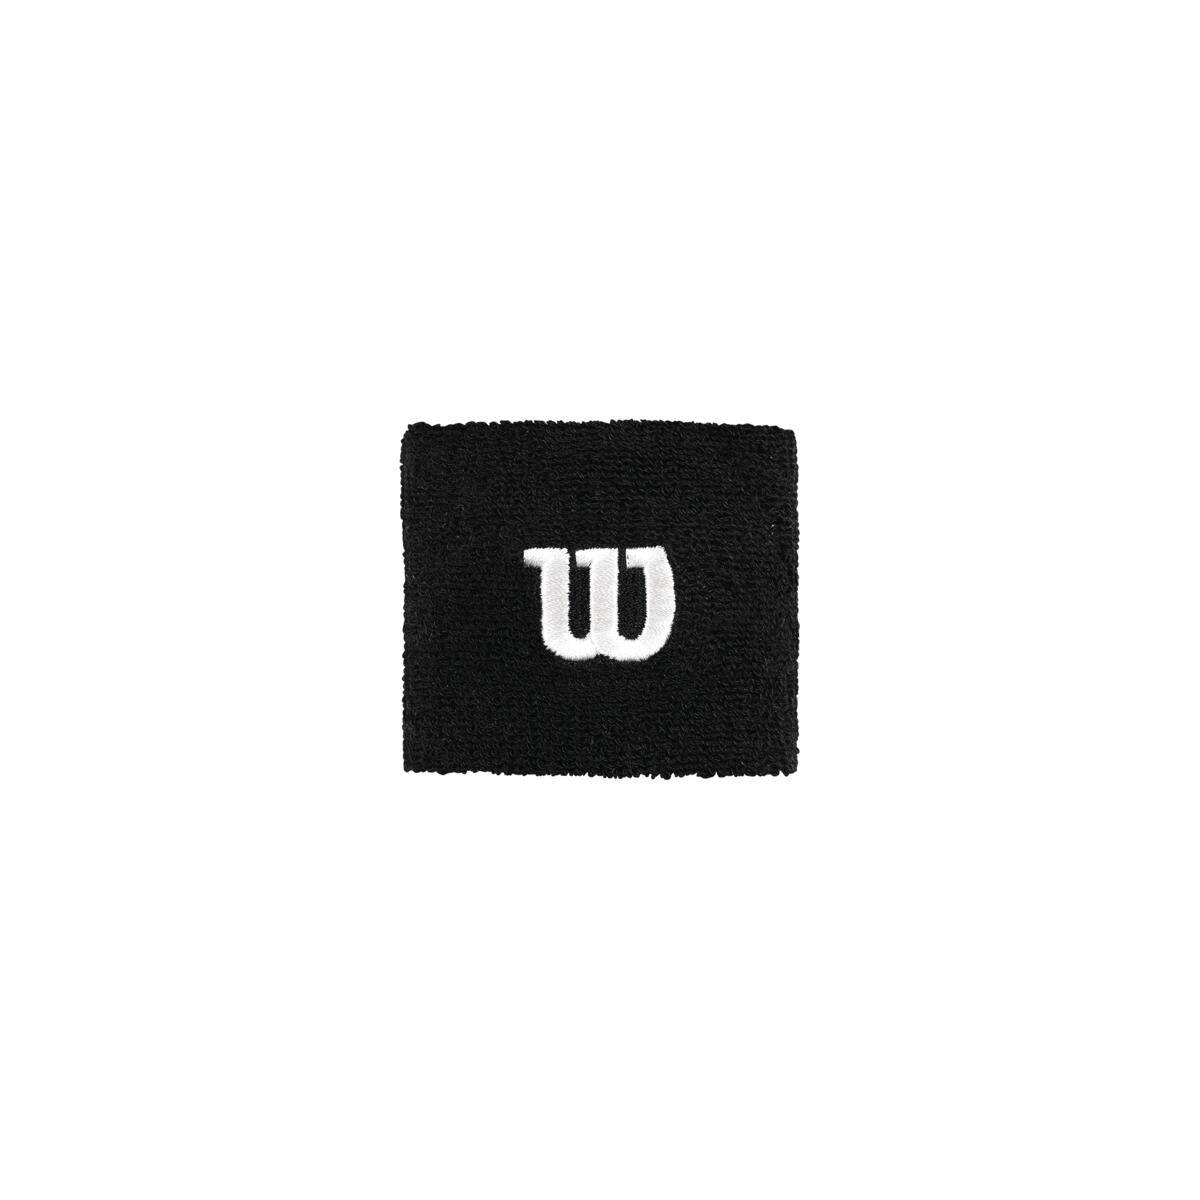 WILSON WRISTBAND Black